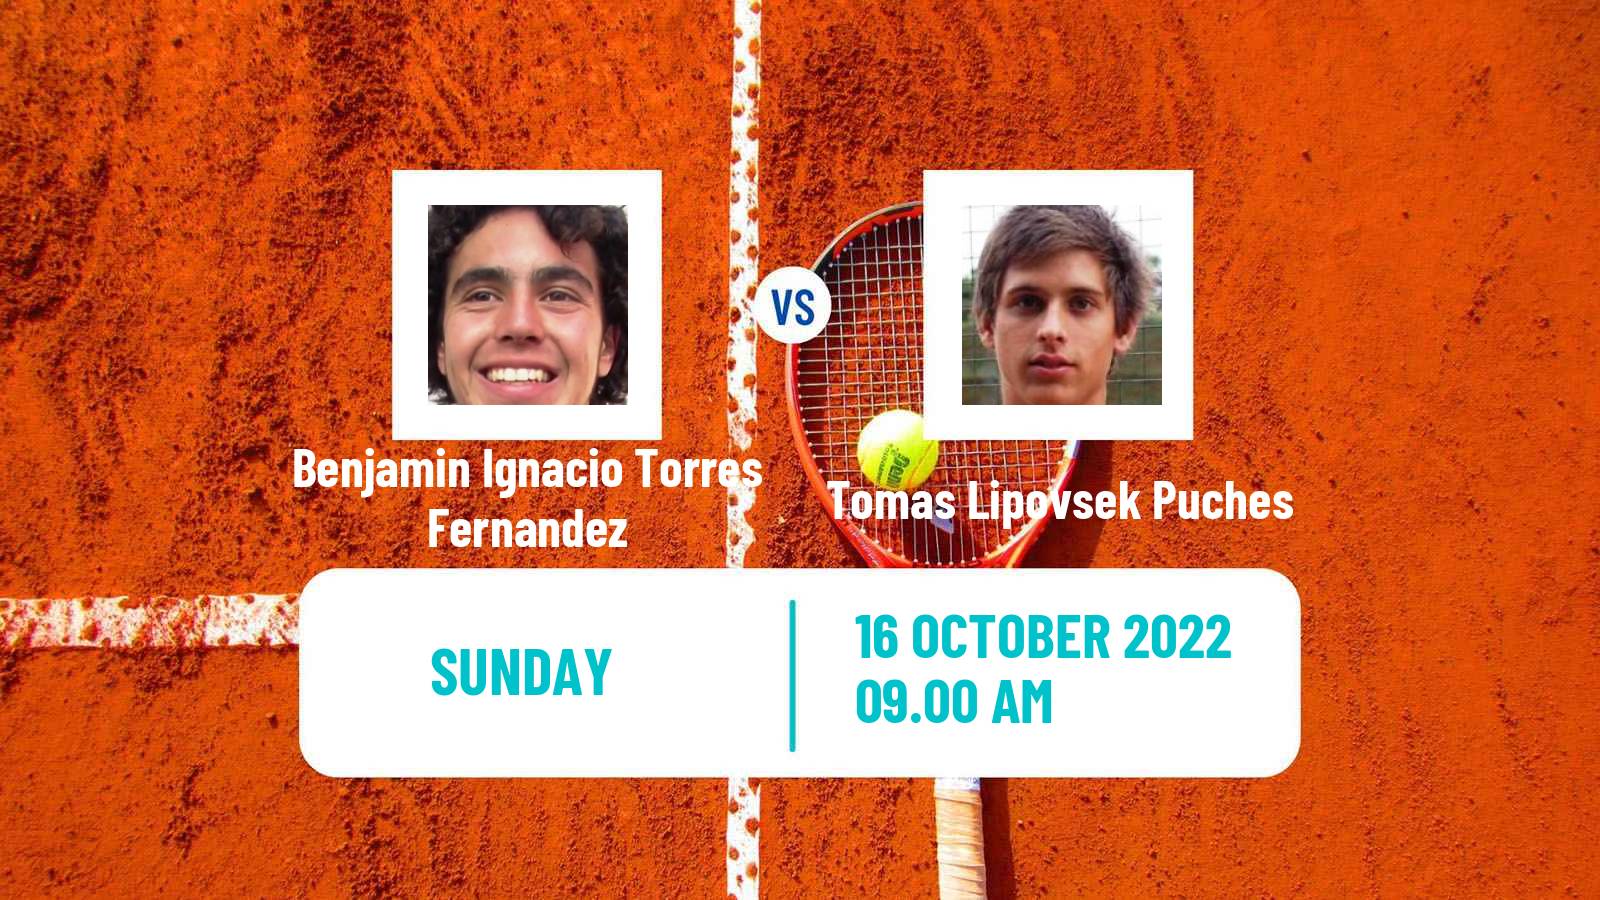 Tennis ATP Challenger Benjamin Ignacio Torres Fernandez - Tomas Lipovsek Puches